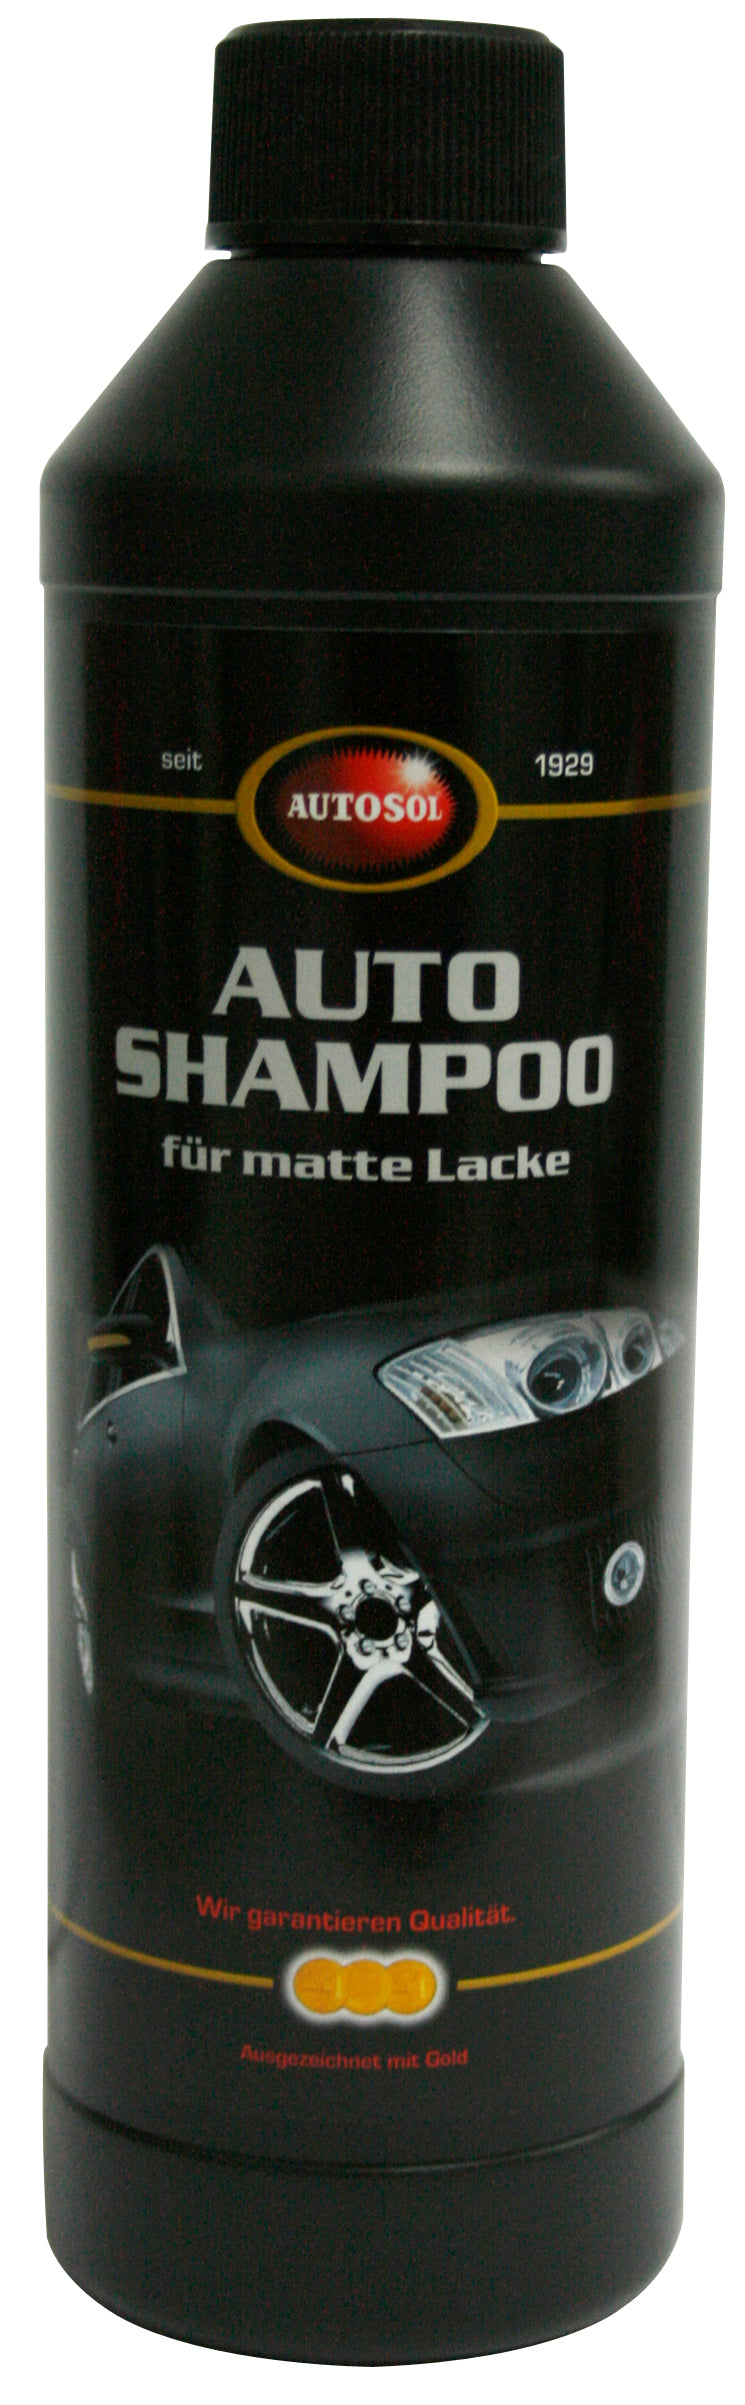 Car Shampoo for matte paintwork